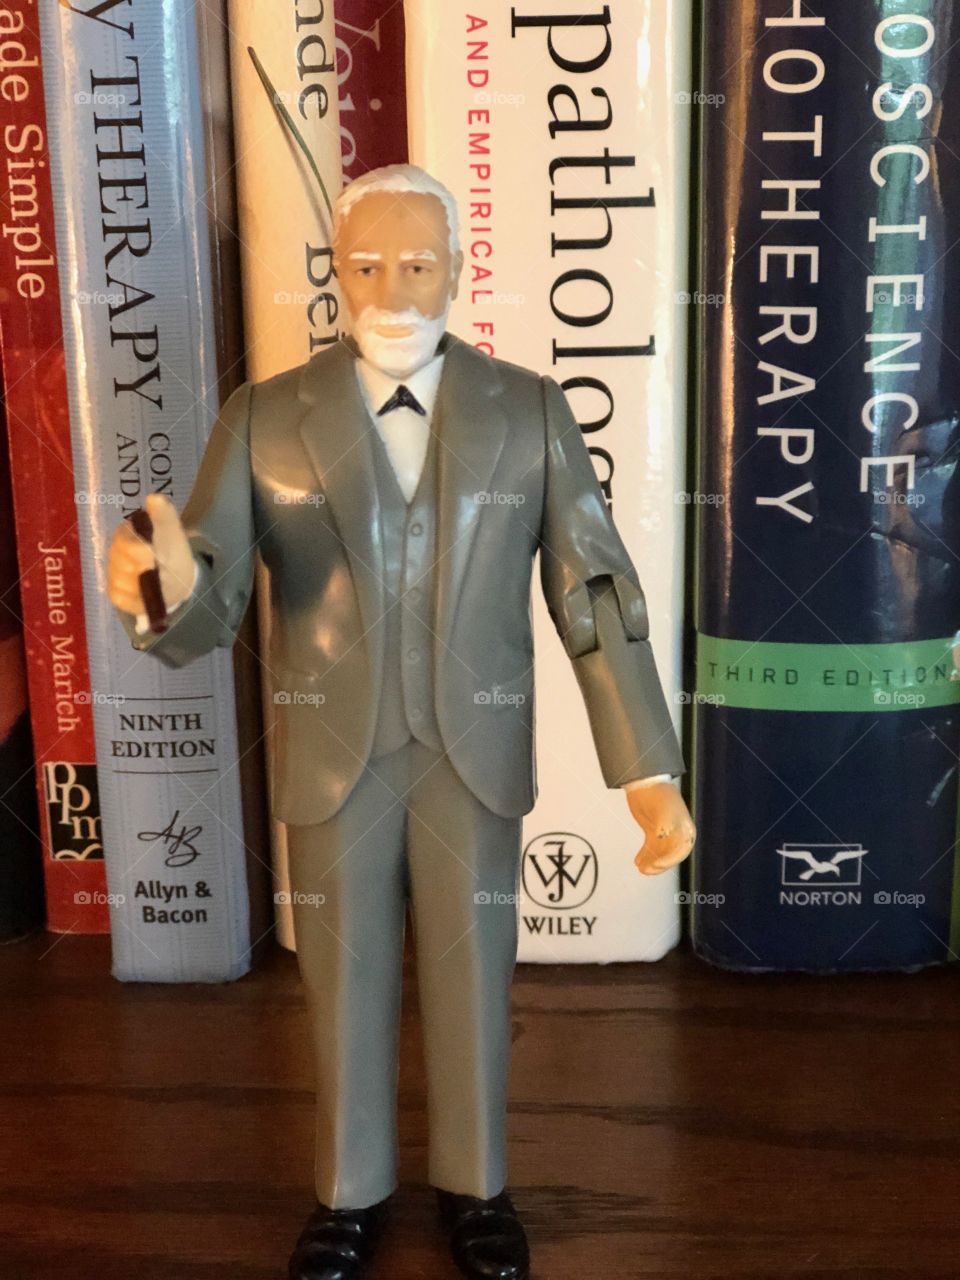 Freud on a bookshelf